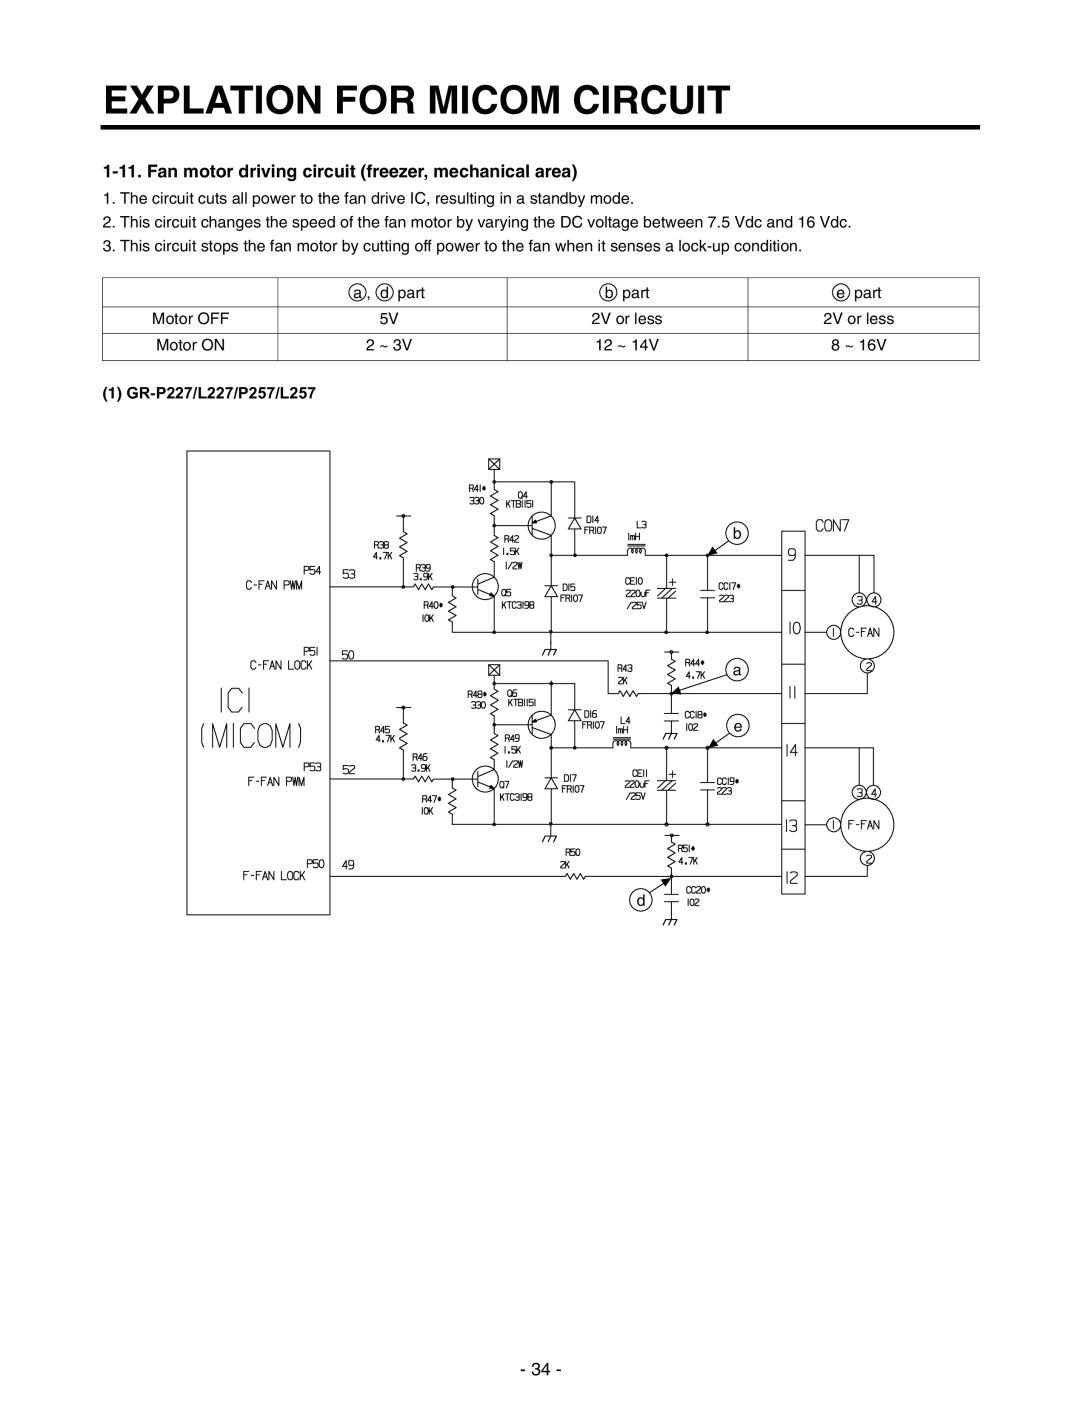 LG Electronics GR-P227/L227, GR-P257/L257 Fan motor driving circuit freezer, mechanical area, Explation For Micom Circuit 